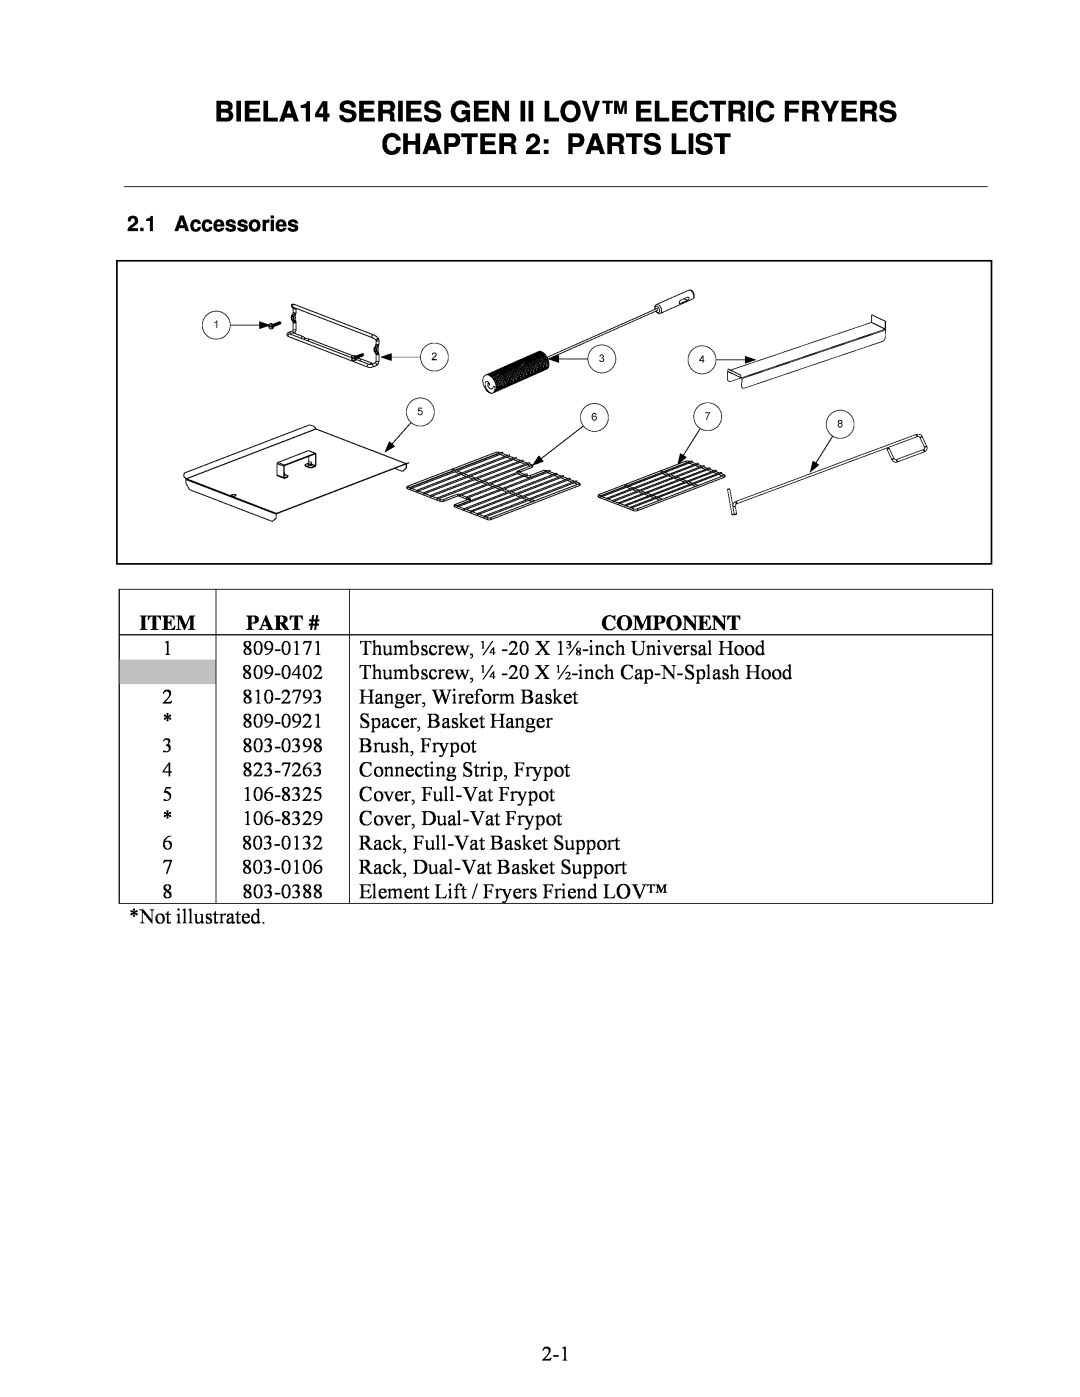 Frymaster manual Parts List, Accessories, Item, Part #, Component, BIELA14 SERIES GEN II LOV ELECTRIC FRYERS 